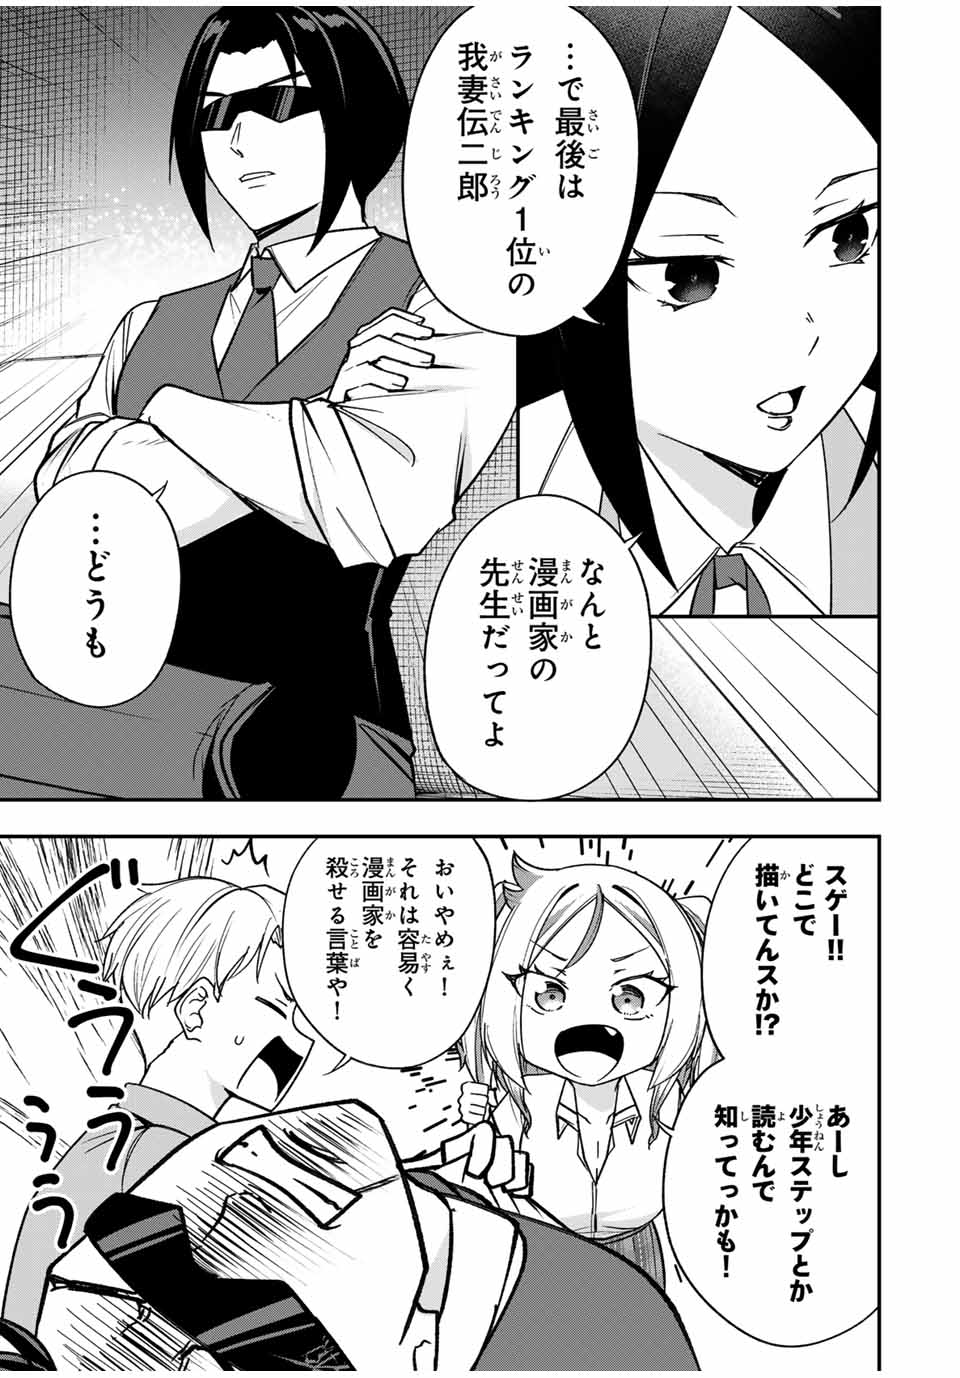 Heroine wa xx Okasegitai - Chapter 12 - Page 7